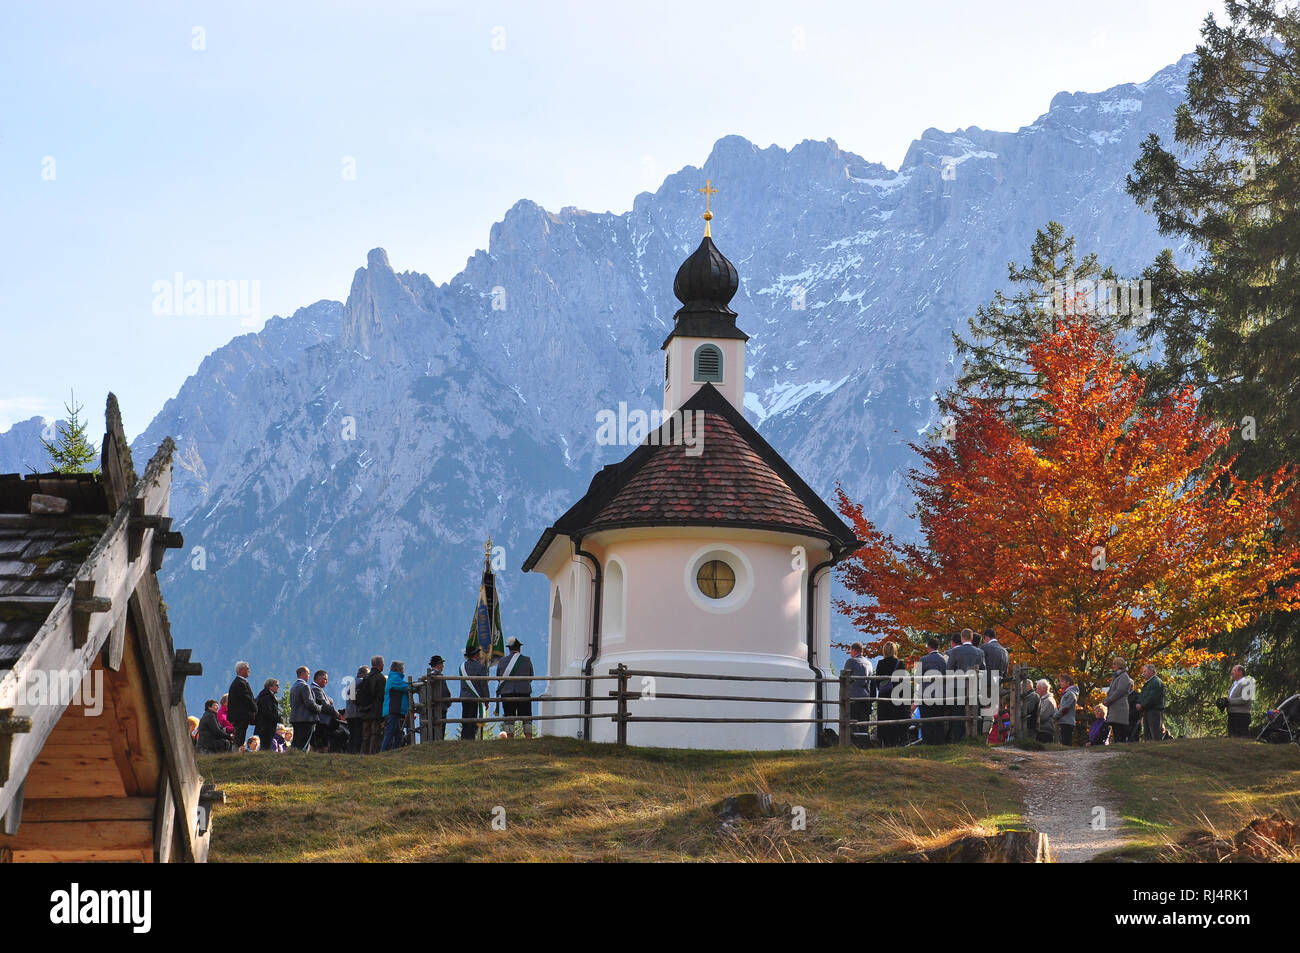 Deutschland, Bayern, Isartal, Lautersee, Kapelle, Karwendelgebirge, Herbst, Andacht, Gl?ubige Stock Photo